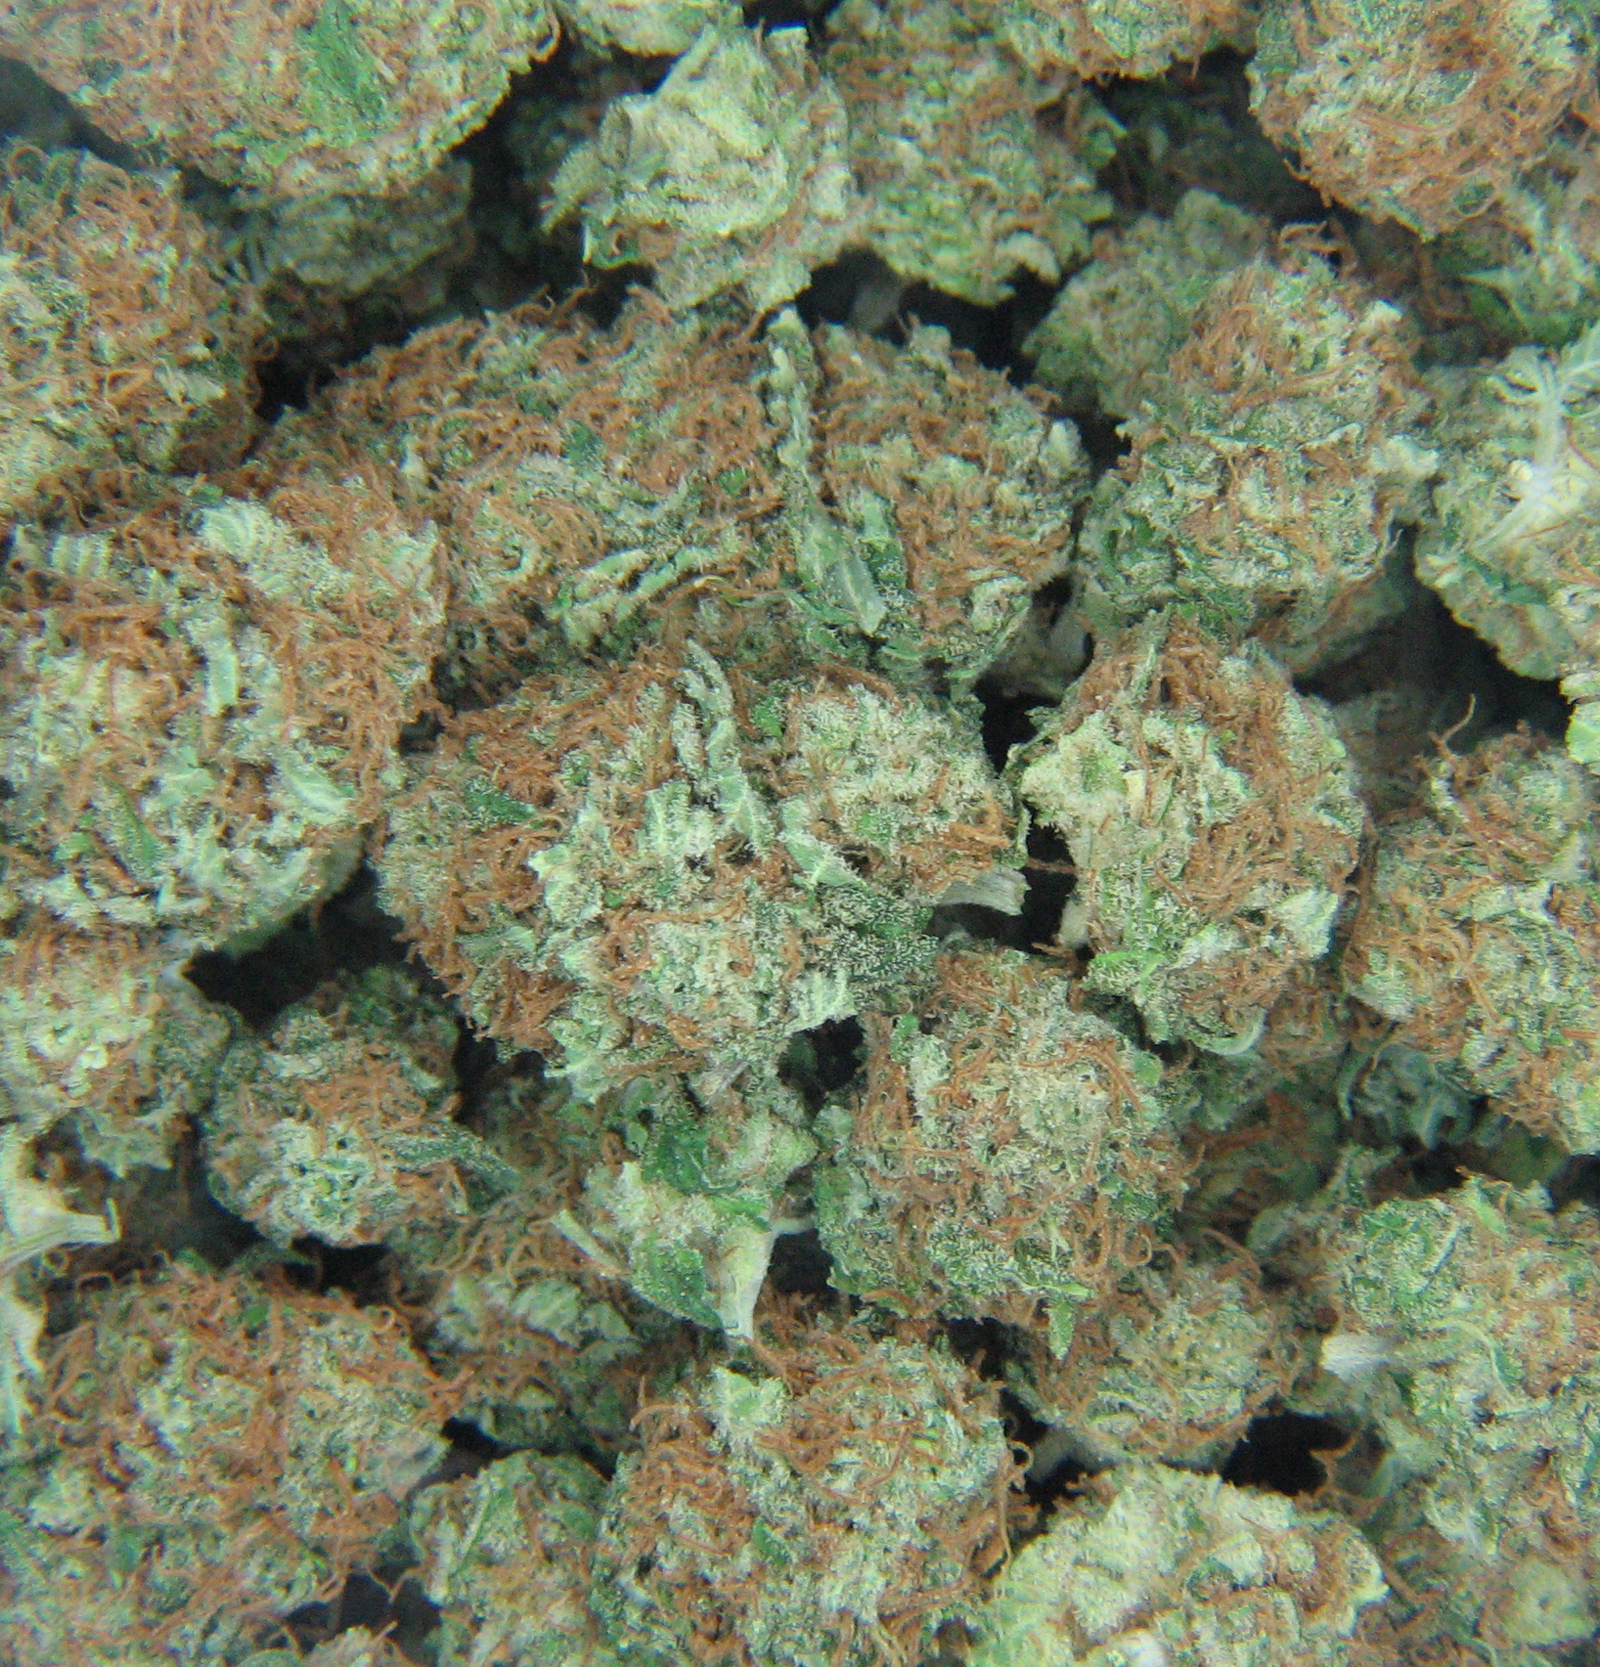 Strawberry-Couch-marijuana-strain-review